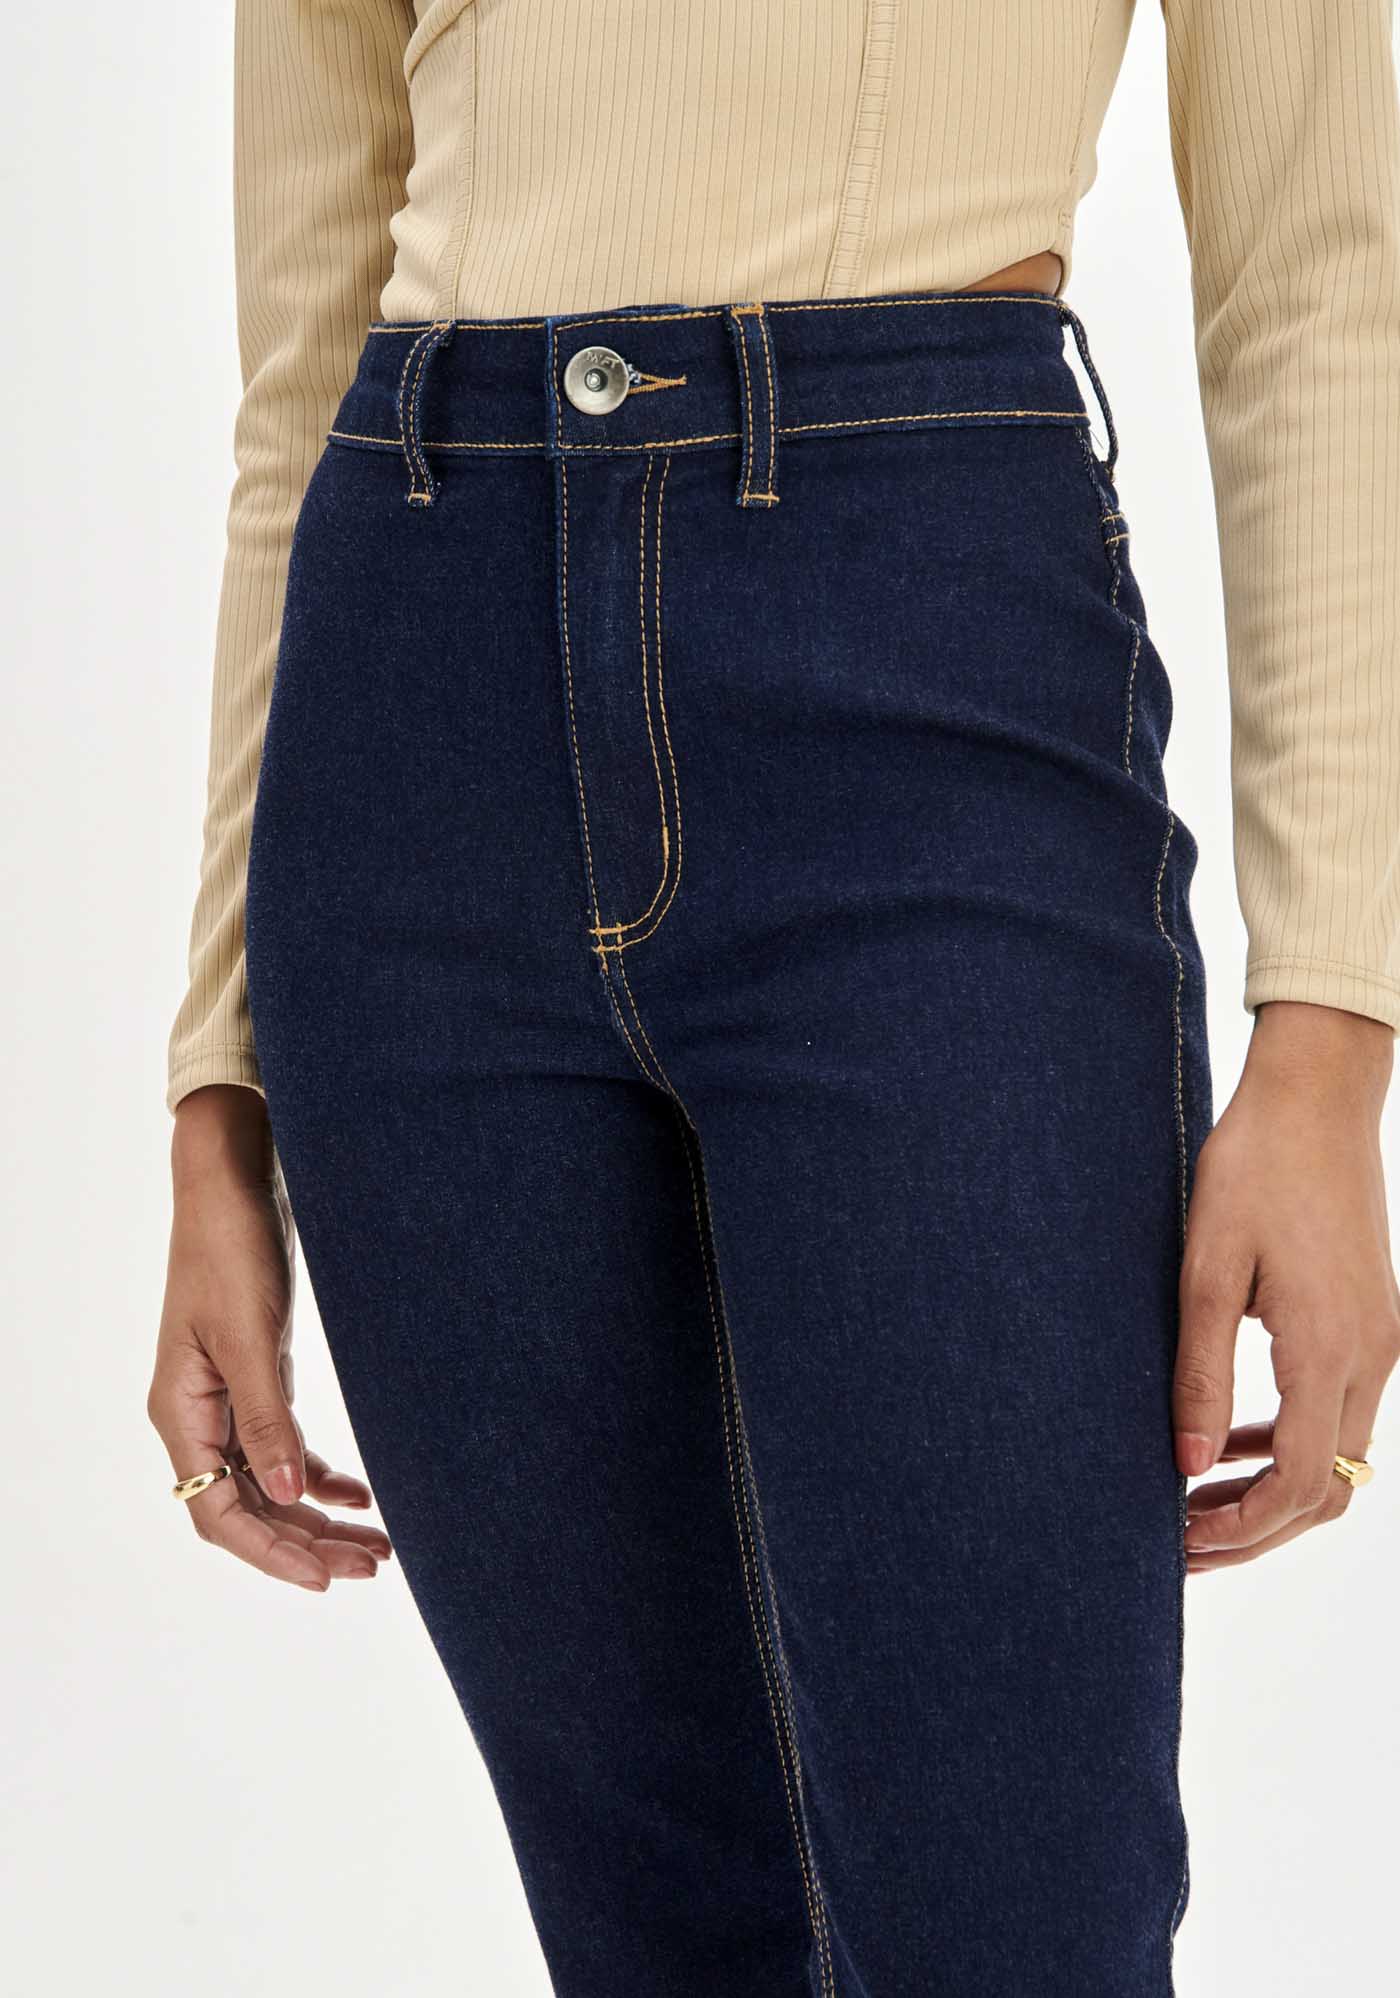 Calça Jeans Jegging Fit For Me Momentos